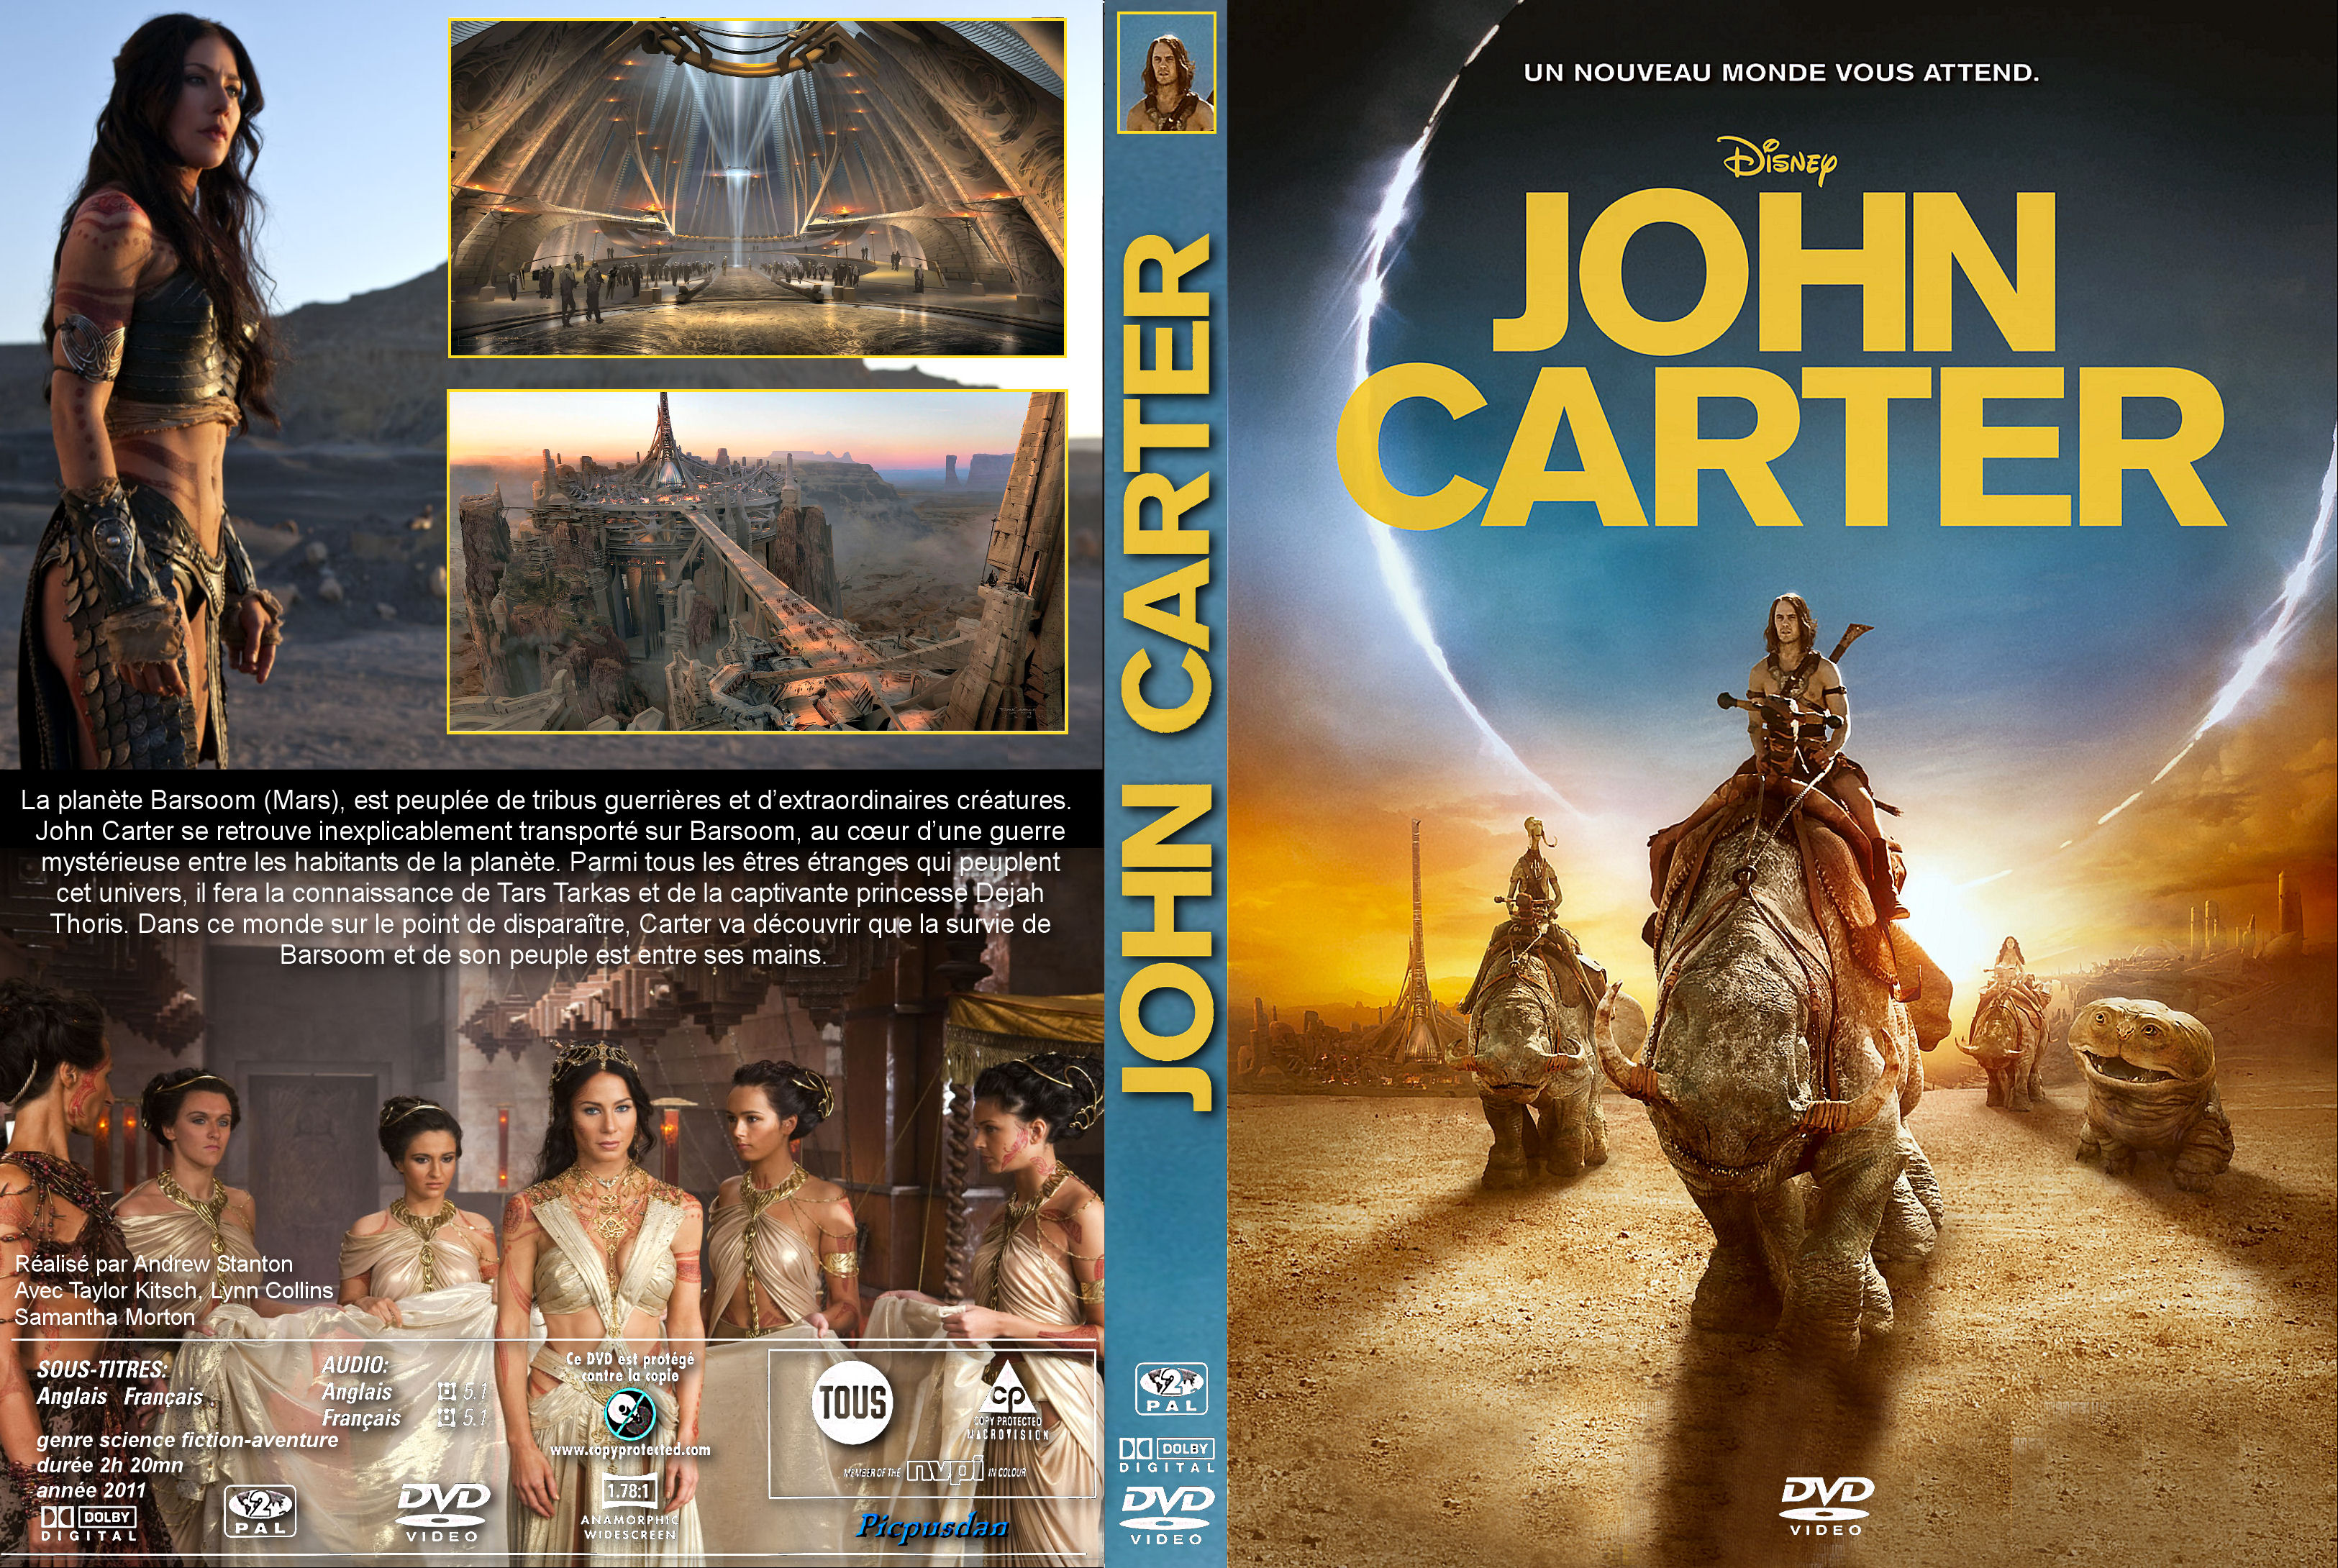 Jaquette DVD John Carter custom